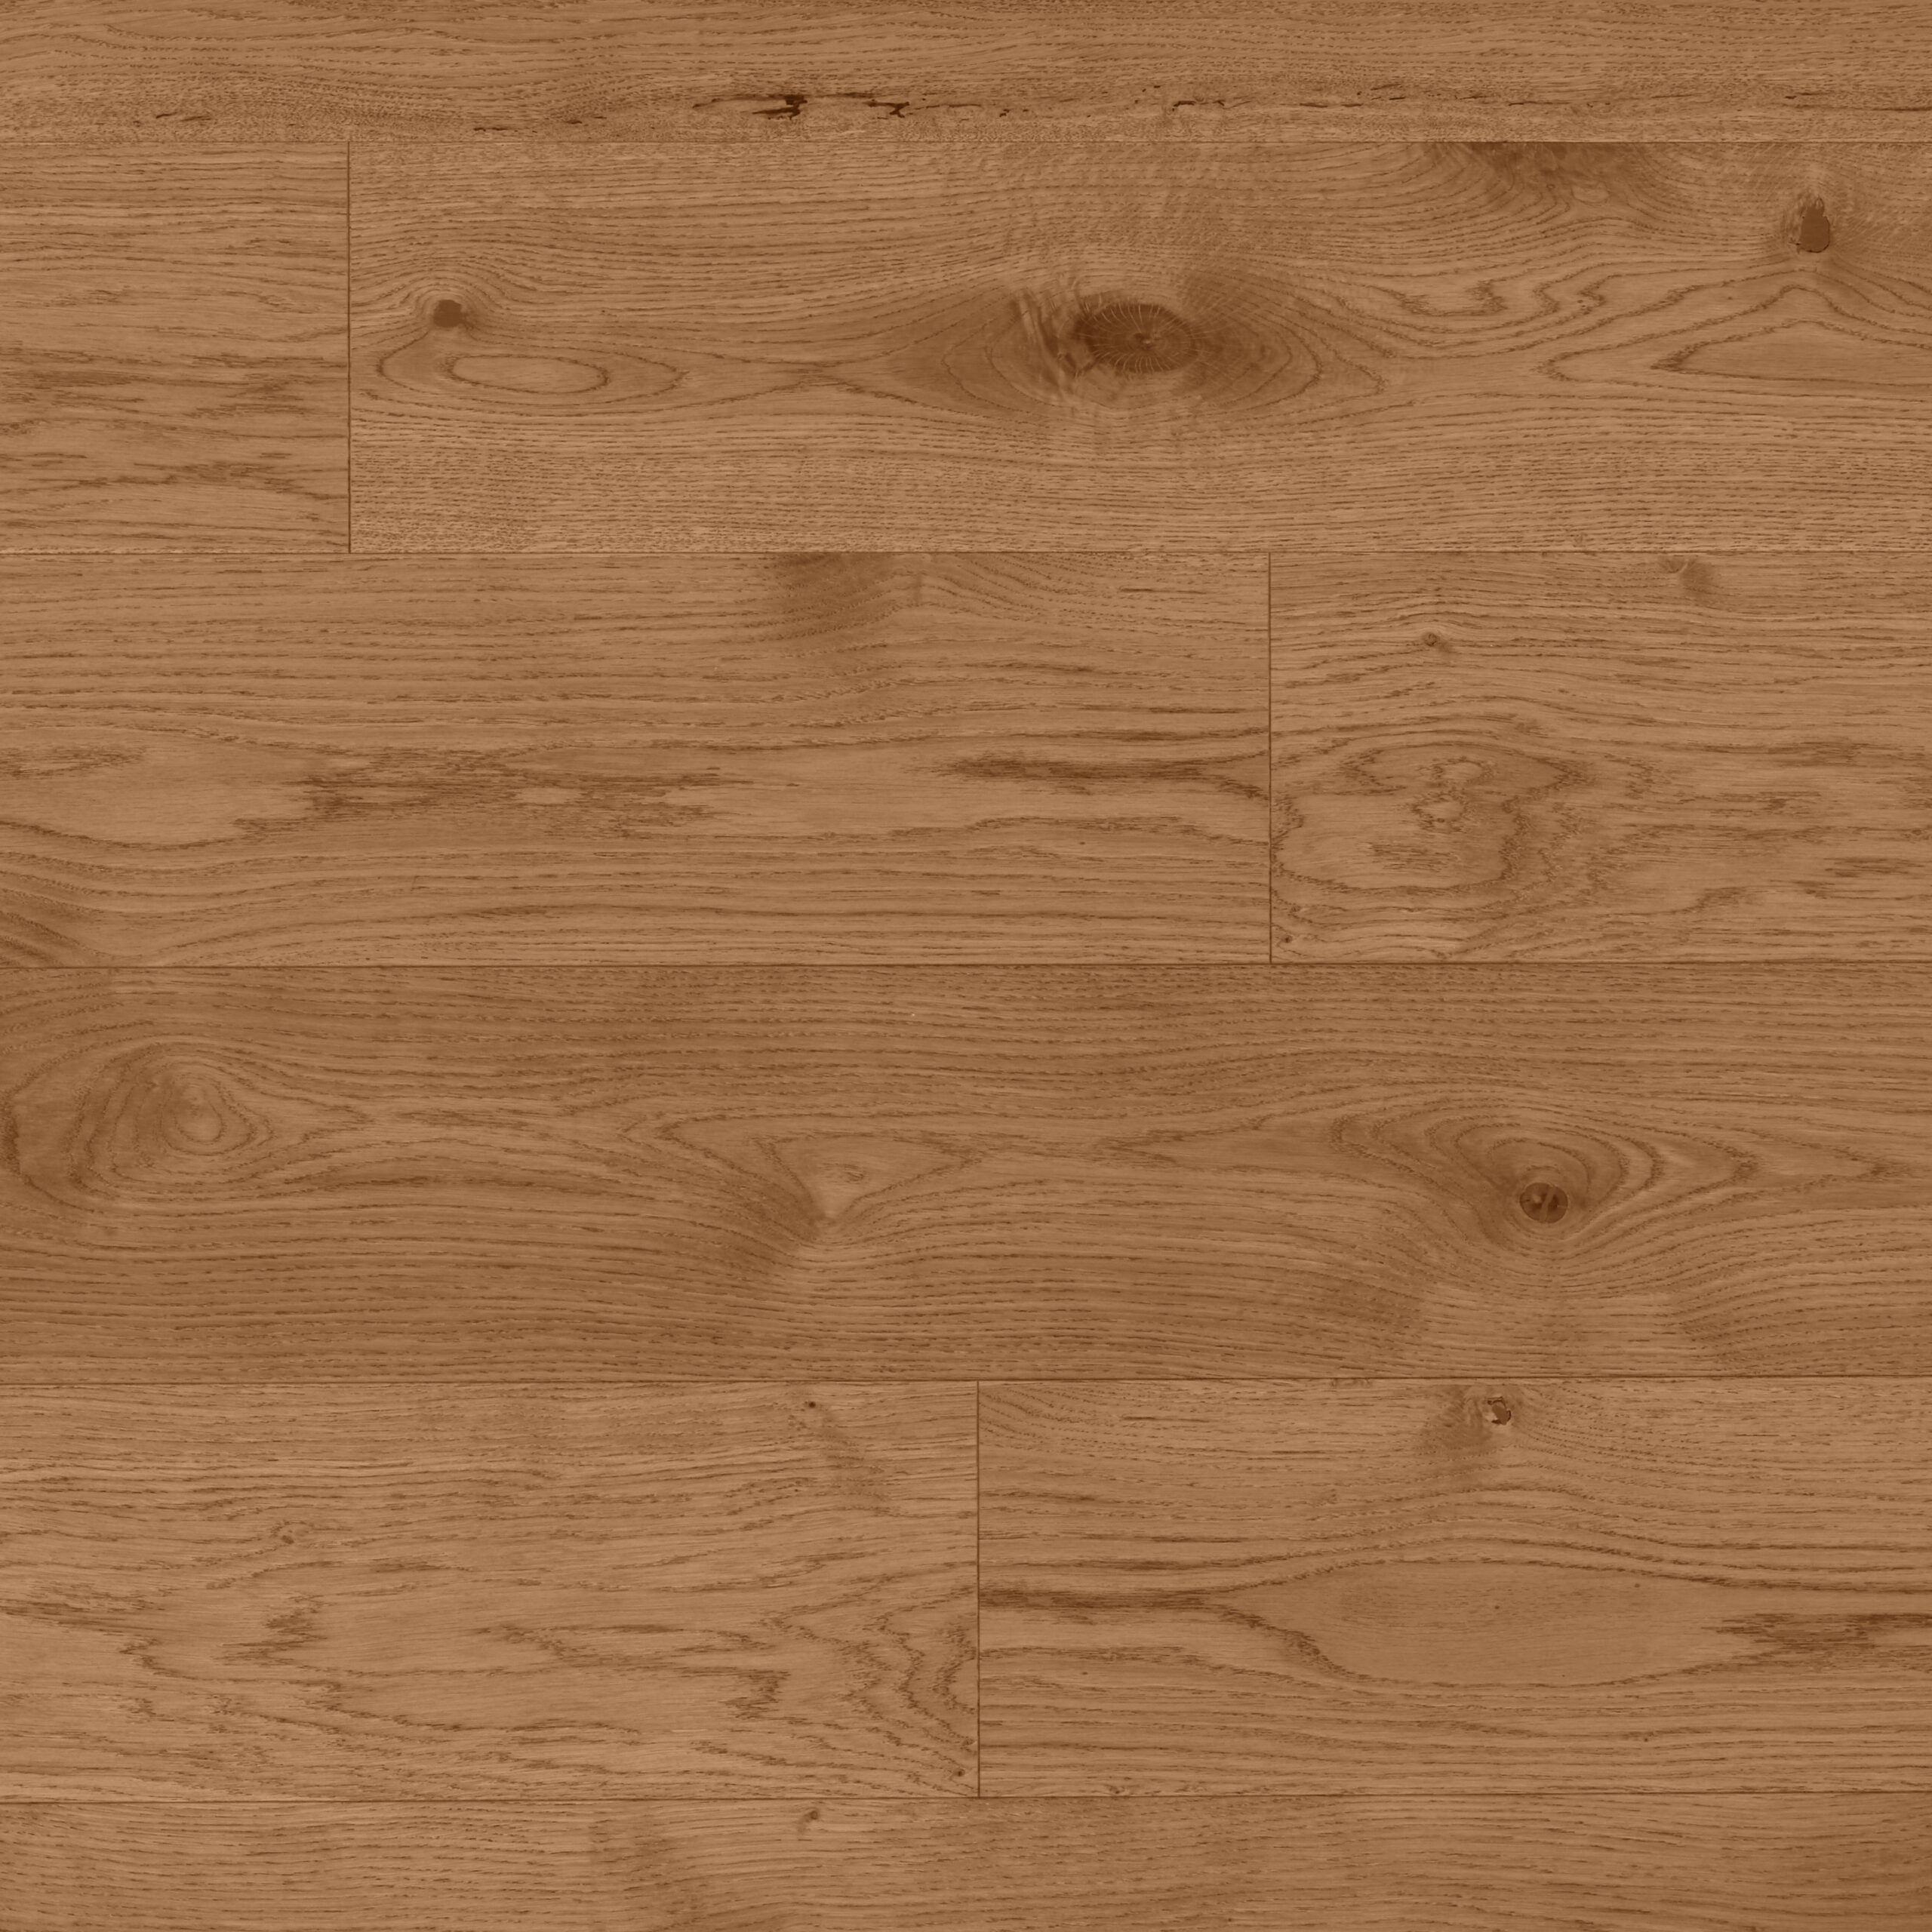 Furlong Flooring: Majestic 189 Clic (9914) – Smoke Stain Brushed & Matt Lacquered (14/3 x 189mm)